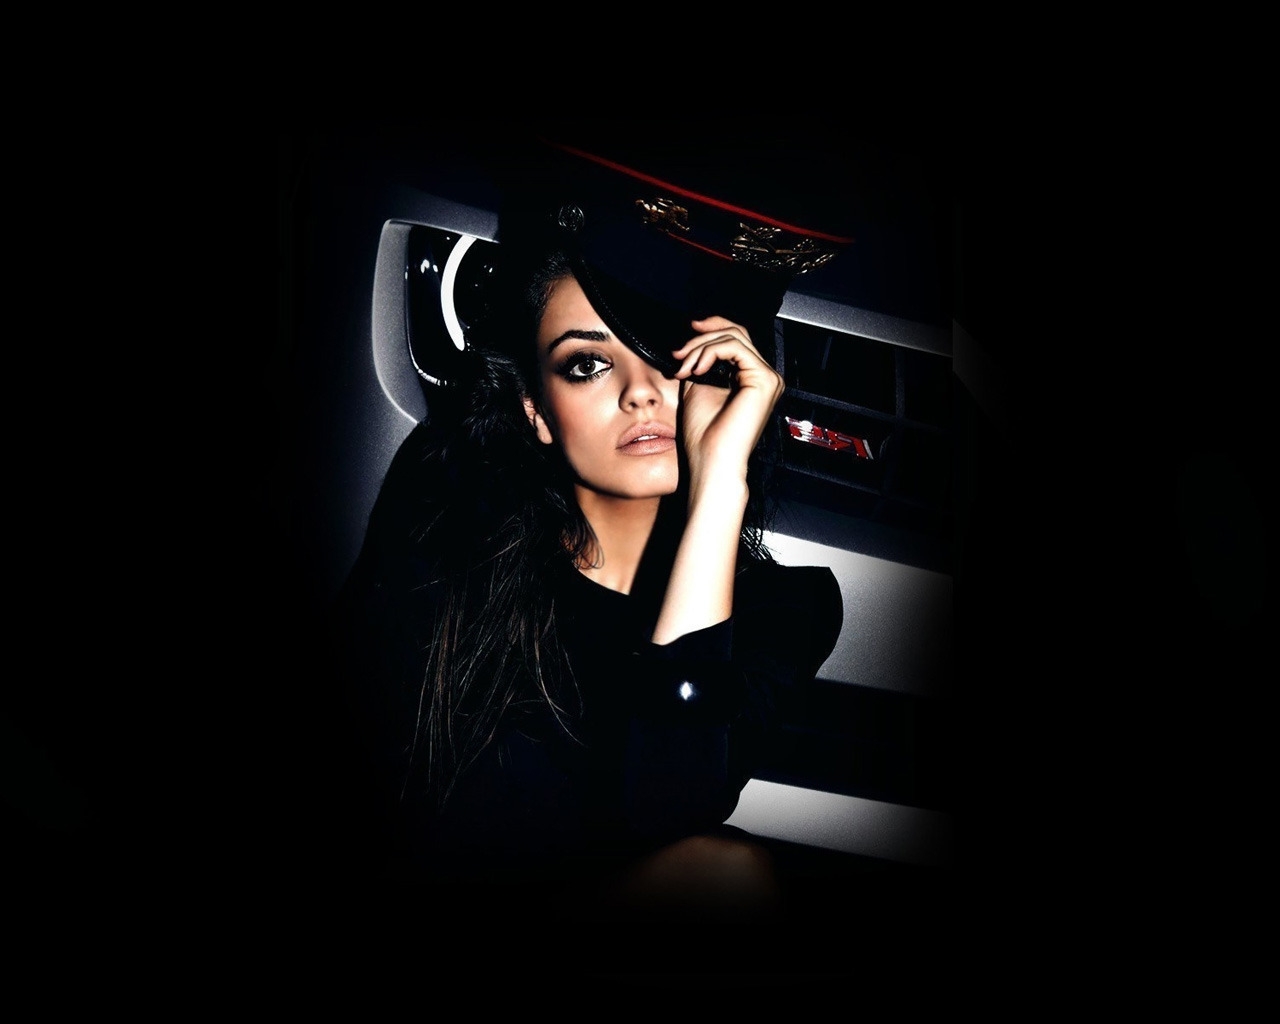 Mila Kunis Look for 1280 x 1024 resolution